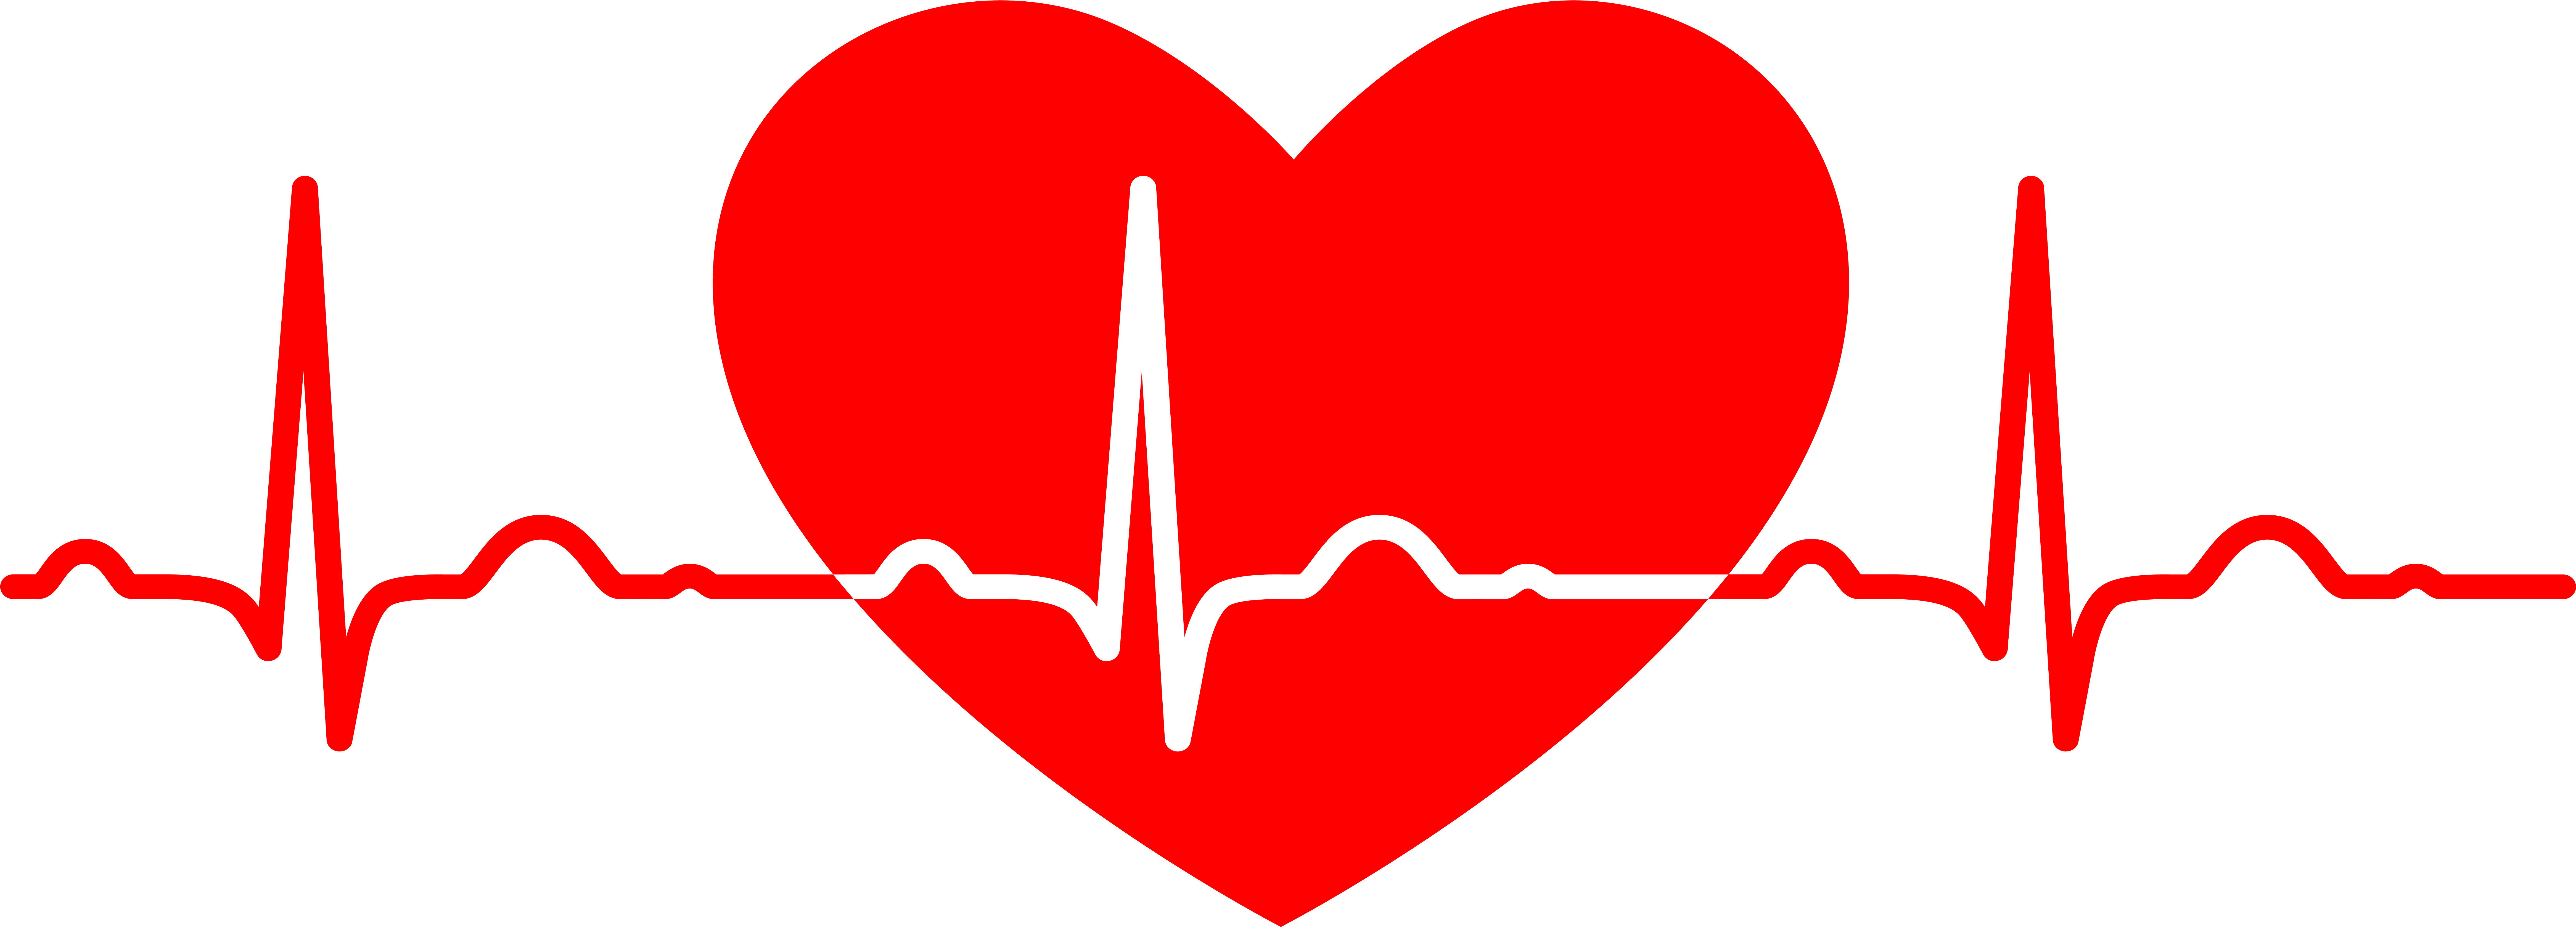 Диаграмма сердца. Кардиограмма. ЭКГ сердца. Пульс сердца. Картодиаграмма сердца.